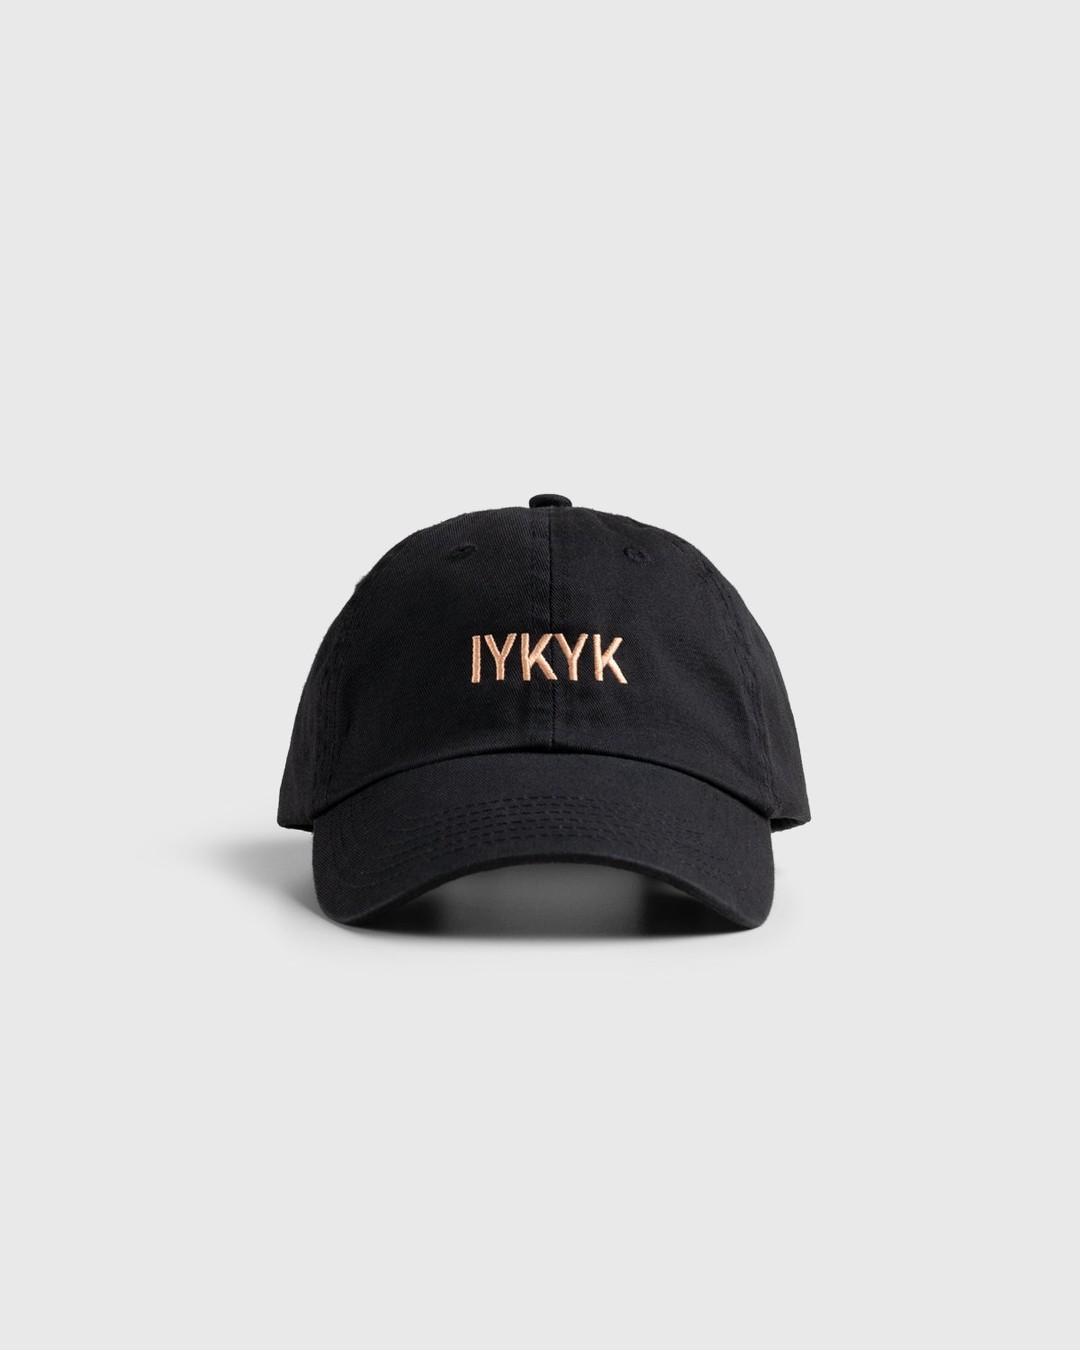 HO HO COCO – IYKYK Cap Black - Hats - Black - Image 2